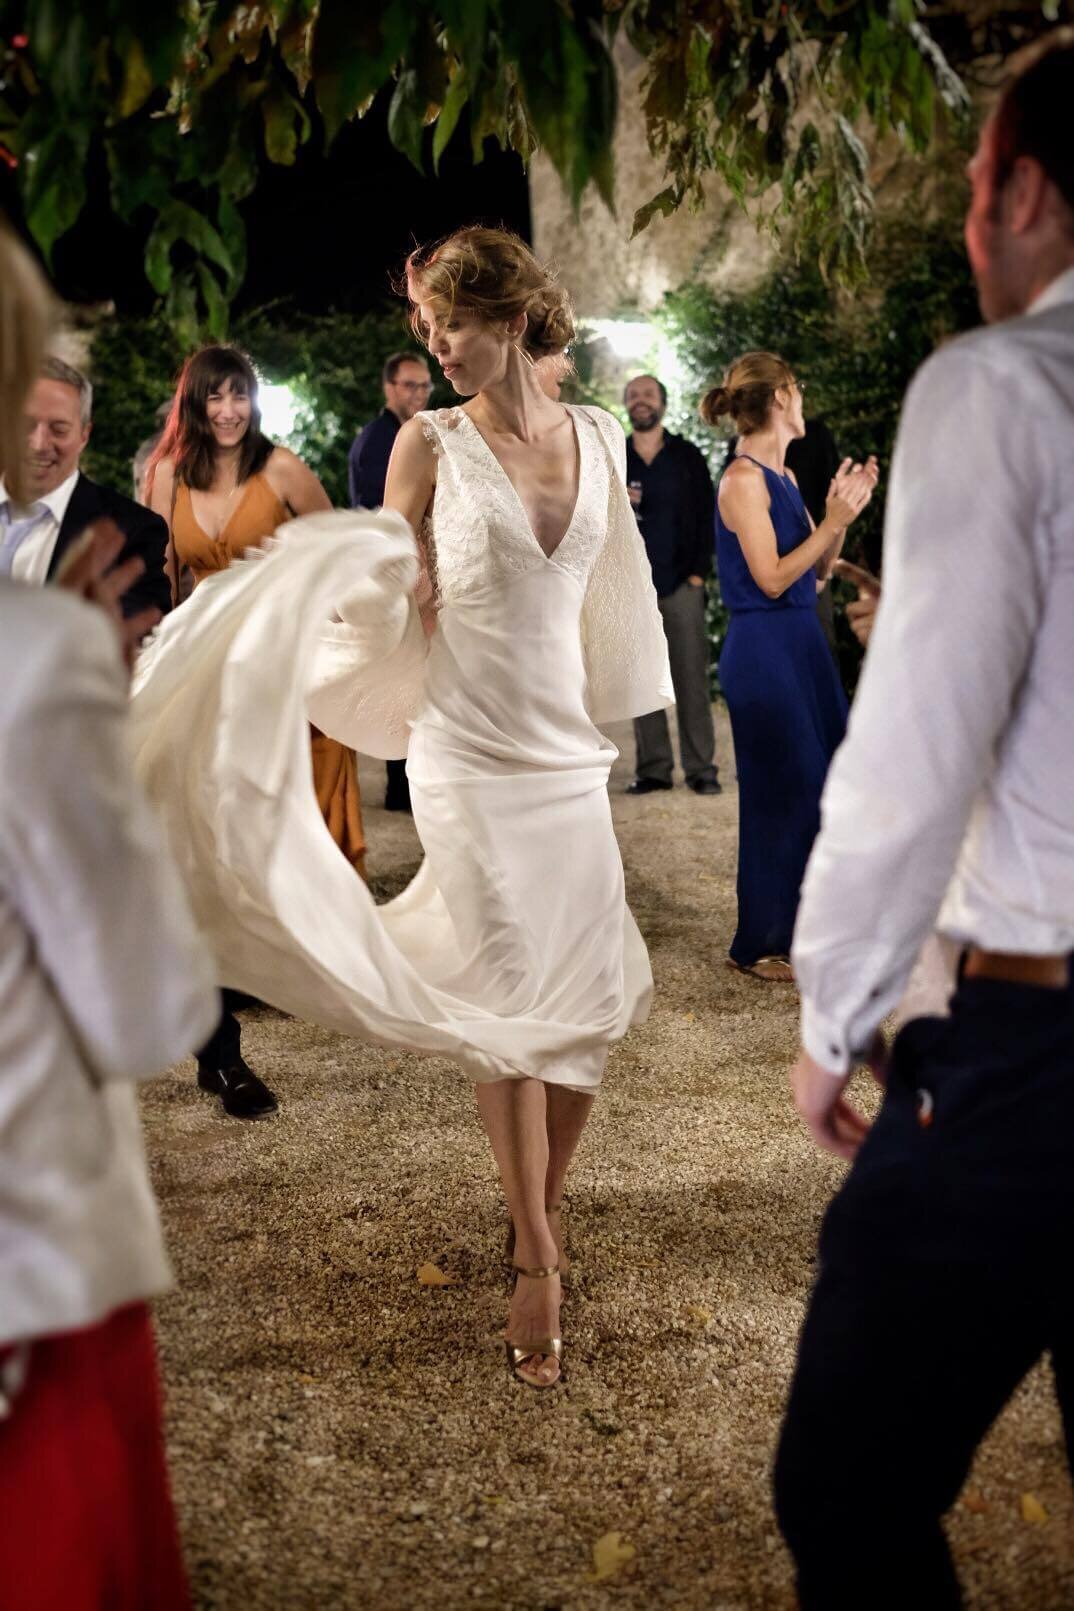 Wedding B&B - Umbria - Italy 2018 Bieke danst